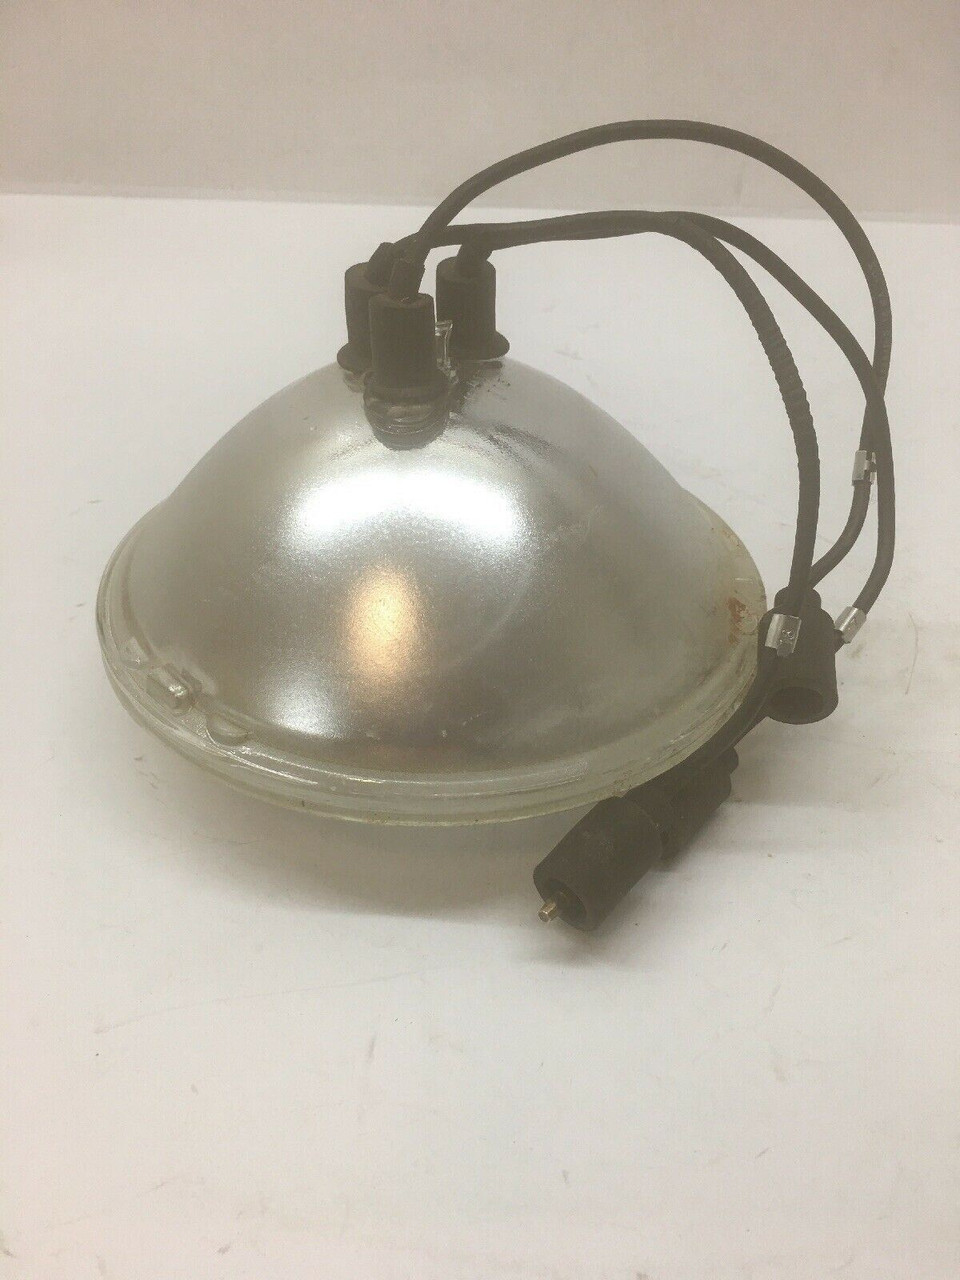 28V 80/60W PAR56 Sealed Beam Lamp 4863-1 Wagner